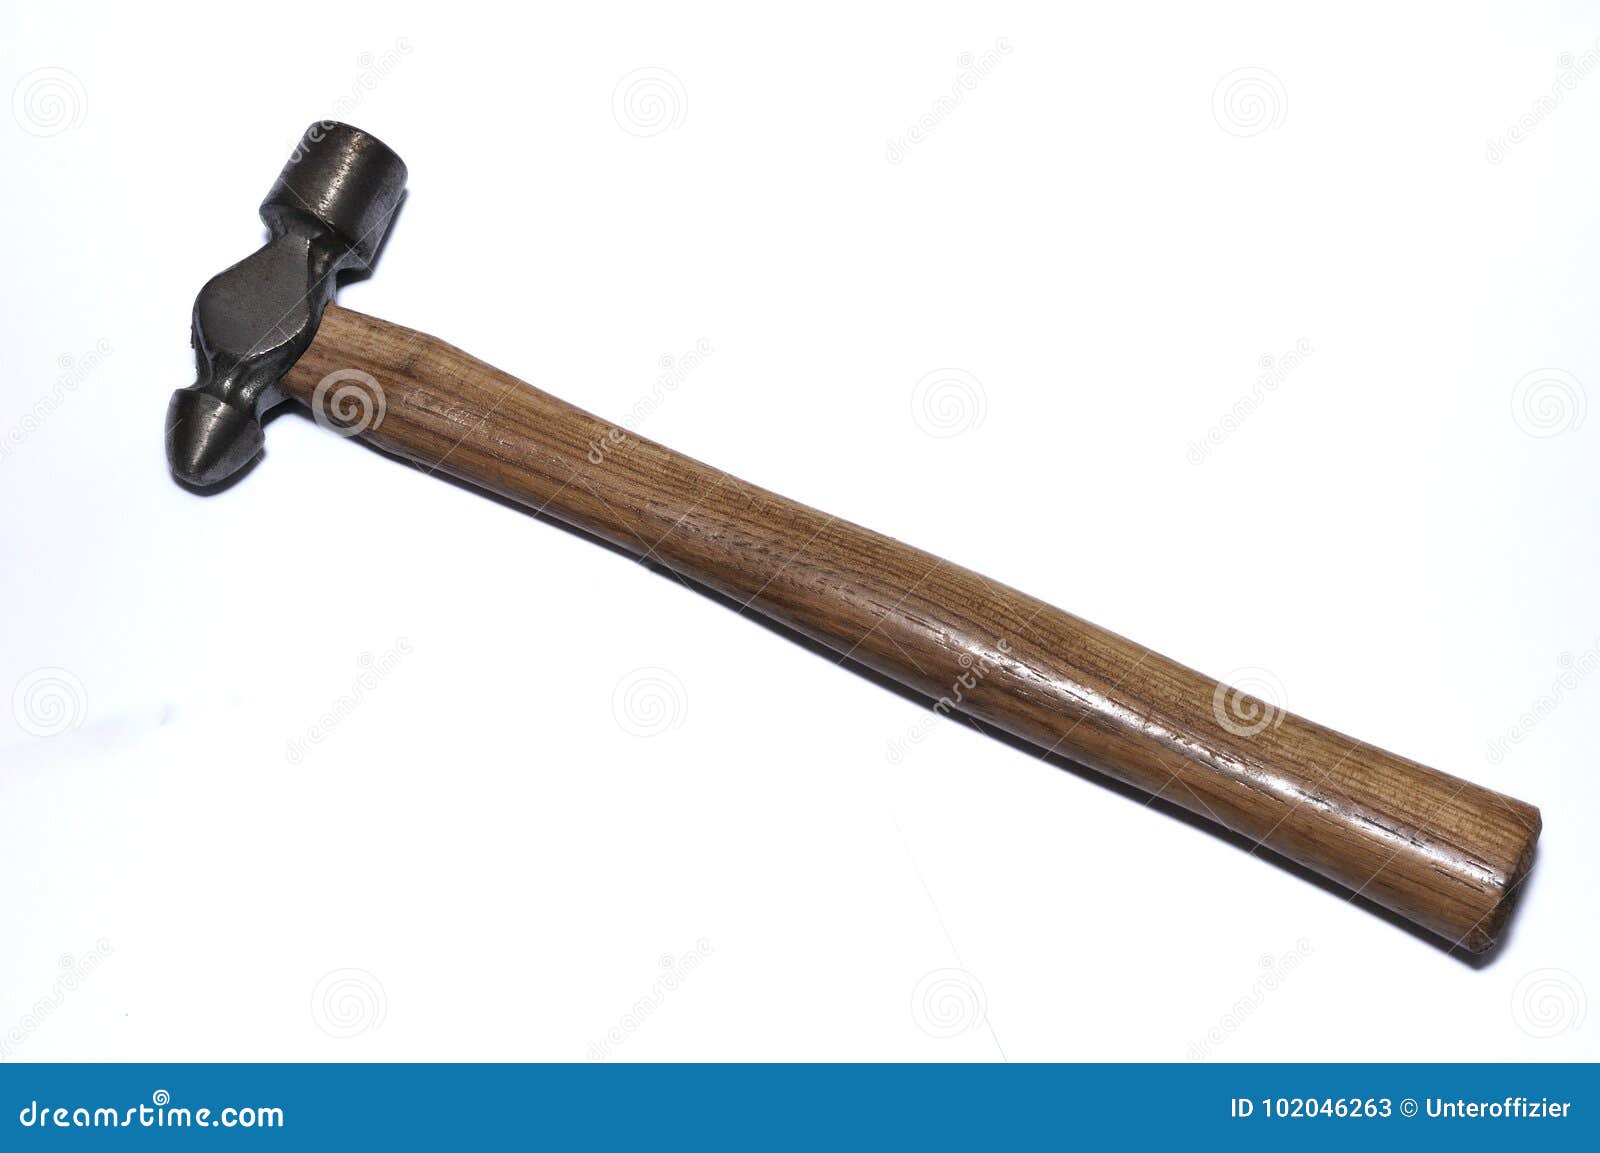 Iti Ball peen hammer||iti ball peen hammer ed drawing||Ball pin hammer  drowing || - YouTube